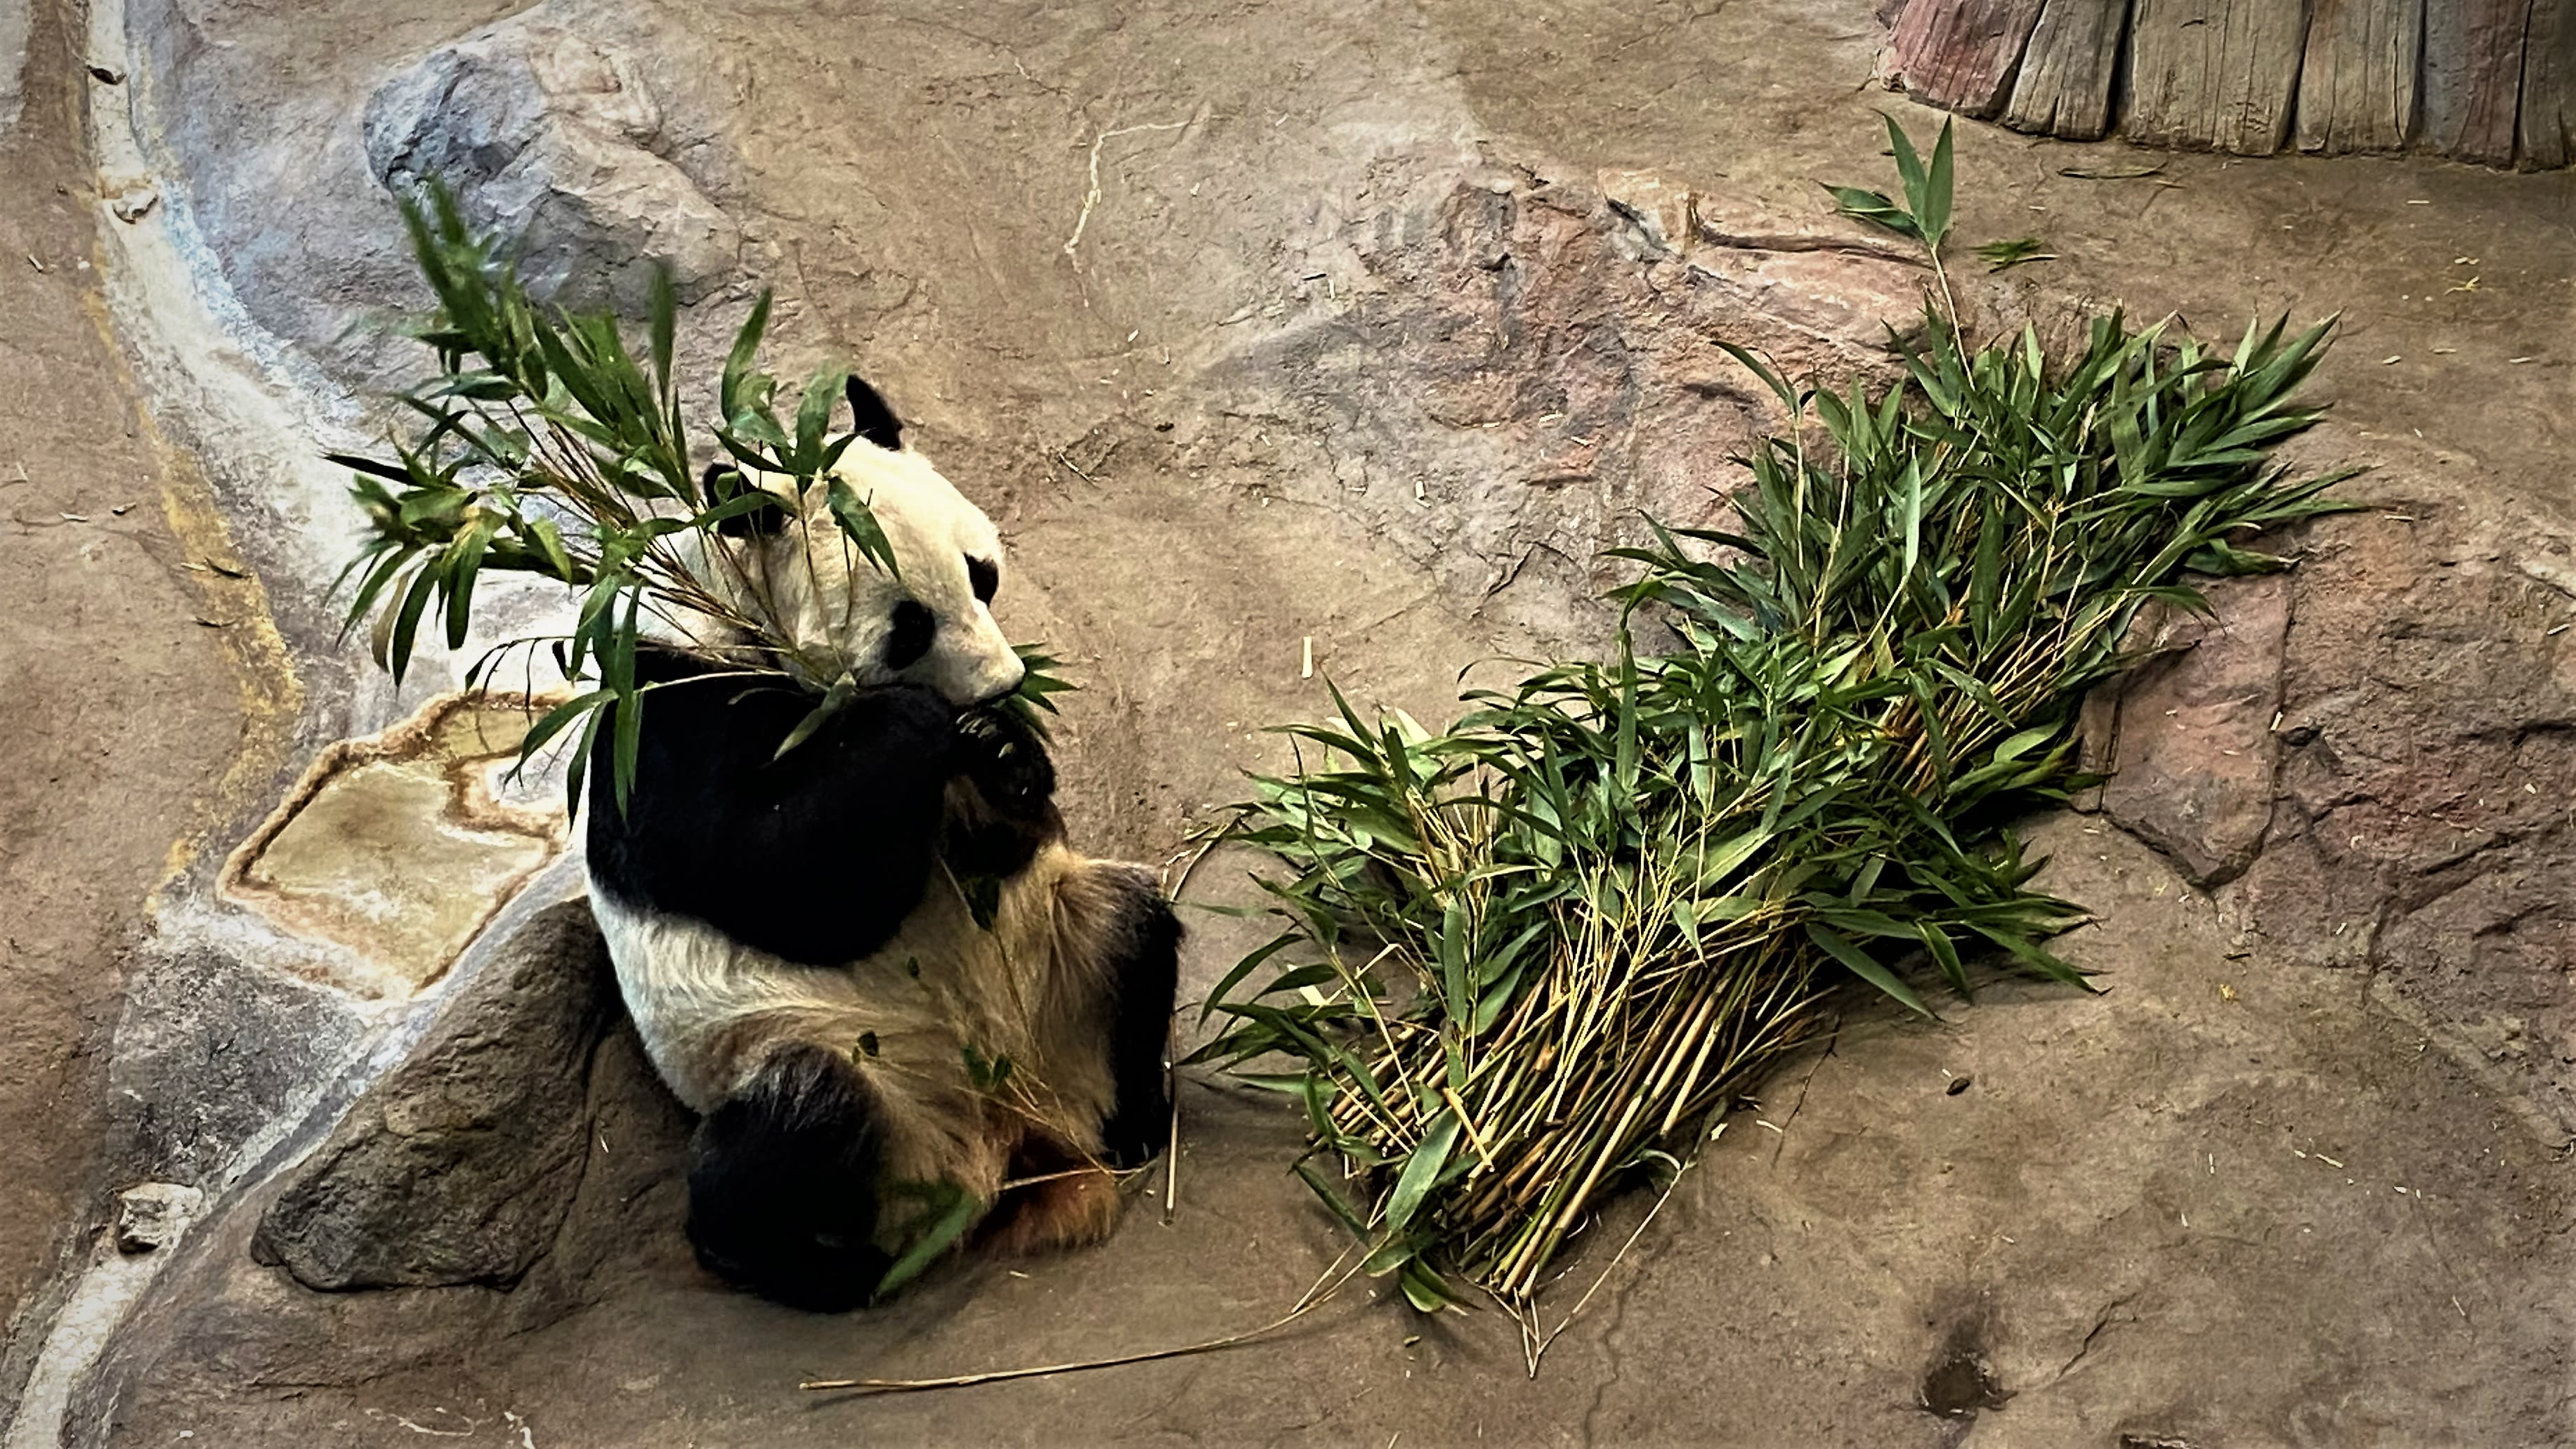 Finland is preparing to return giant pandas to China